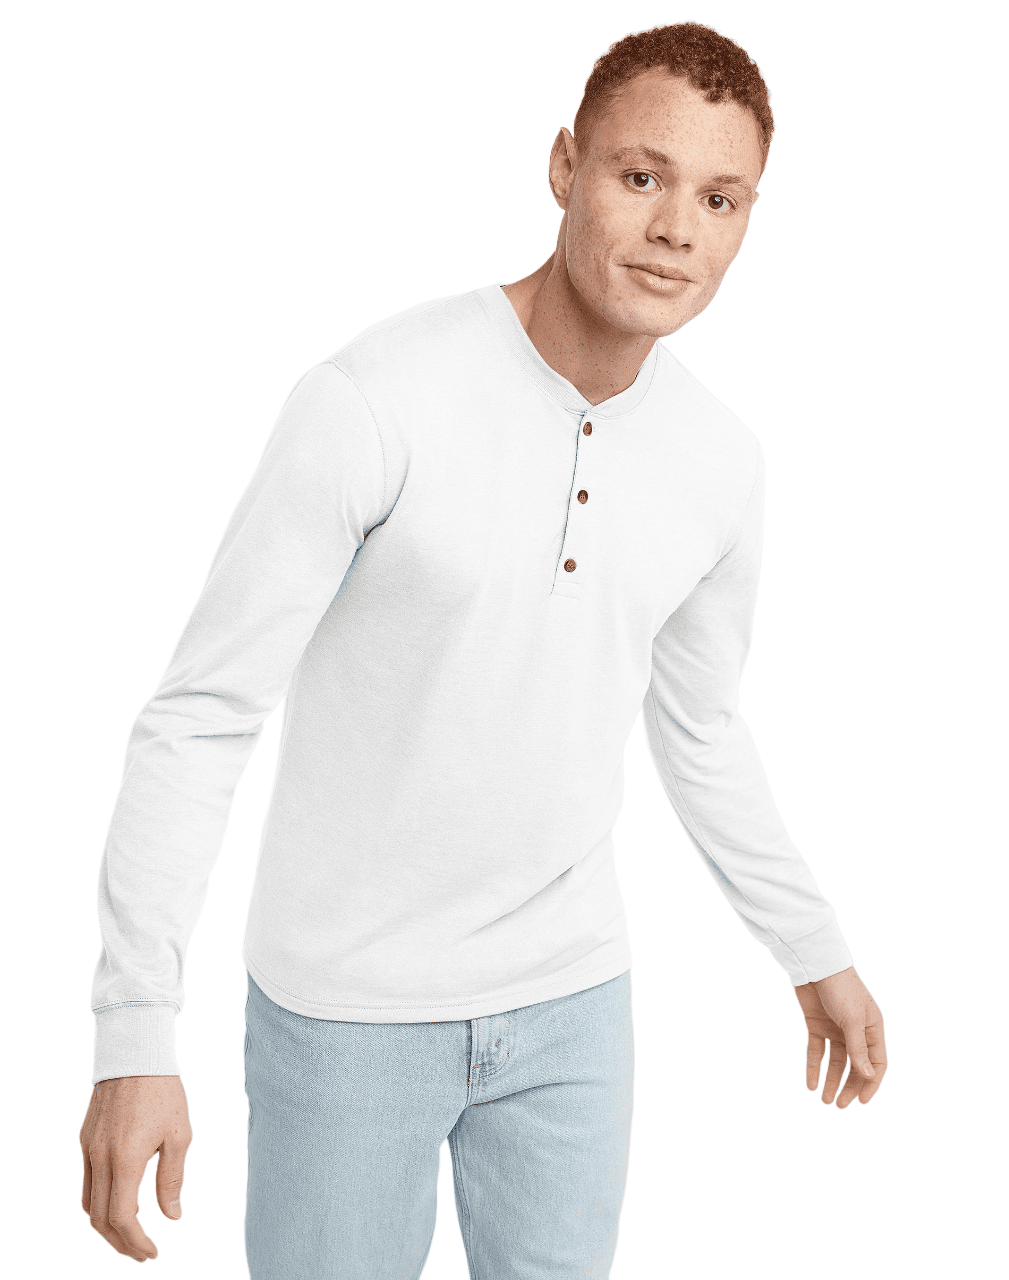 Hanes Originals Mens Cotton Long Sleeve Henley T-Shirt